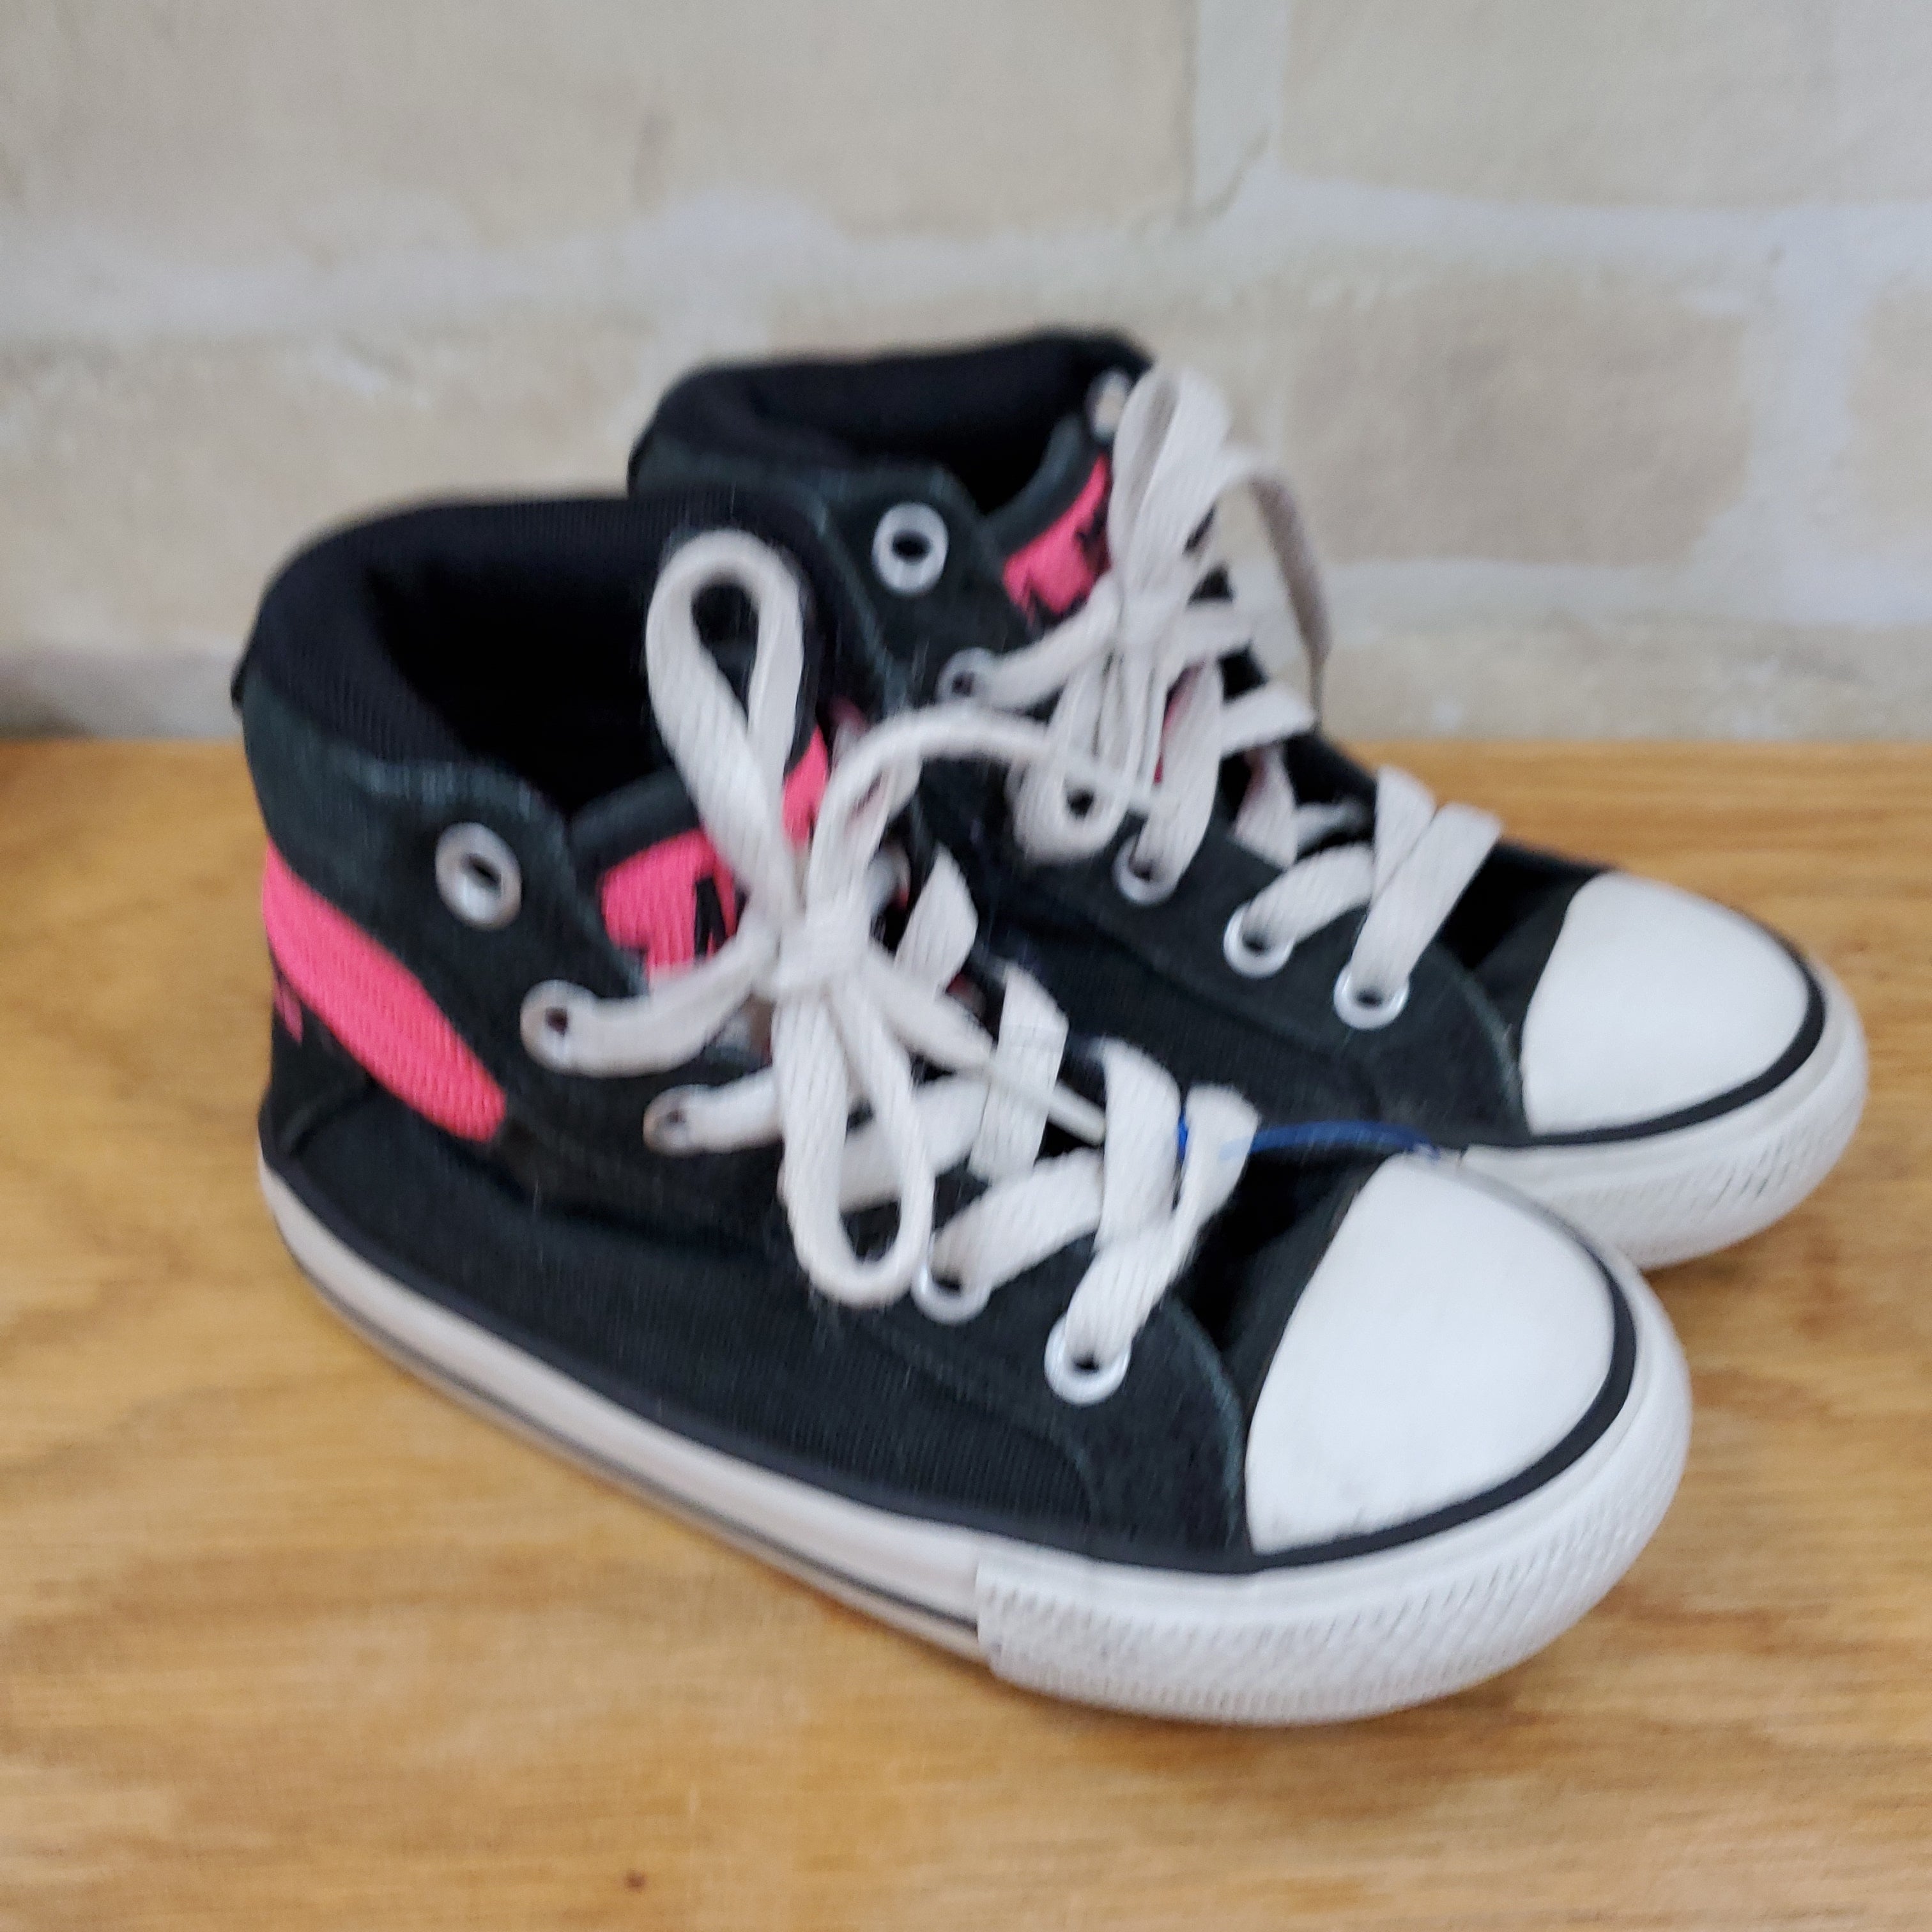 Converse girls tennis shoes black/pink high top tie 8